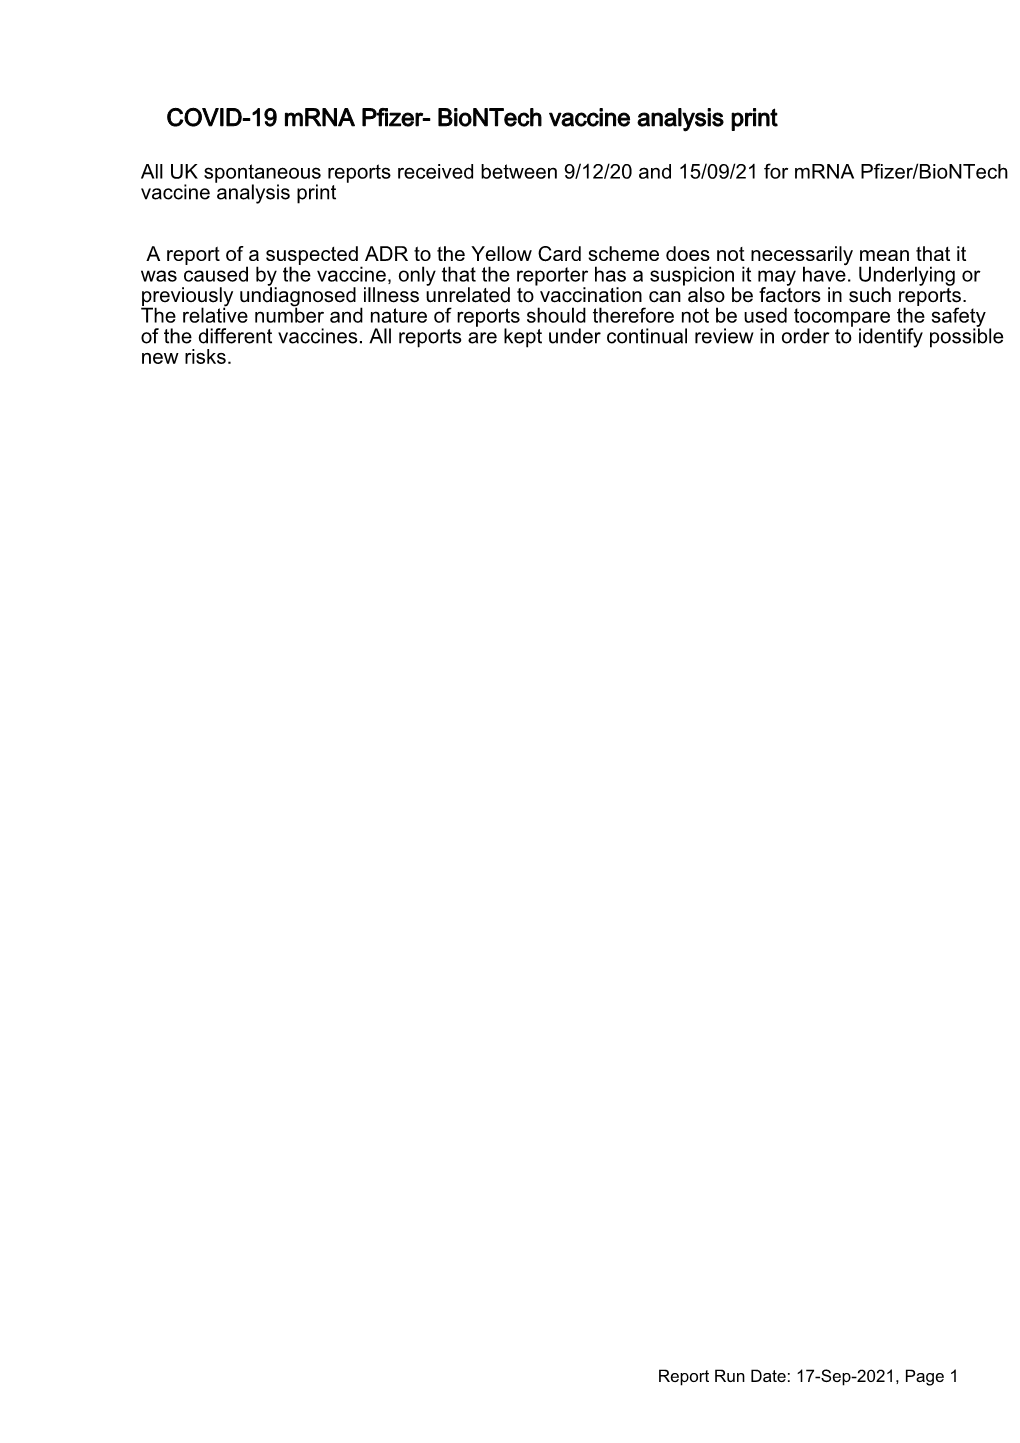 COVID-19 Mrna Pfizer- Biontech Vaccine Analysis Print